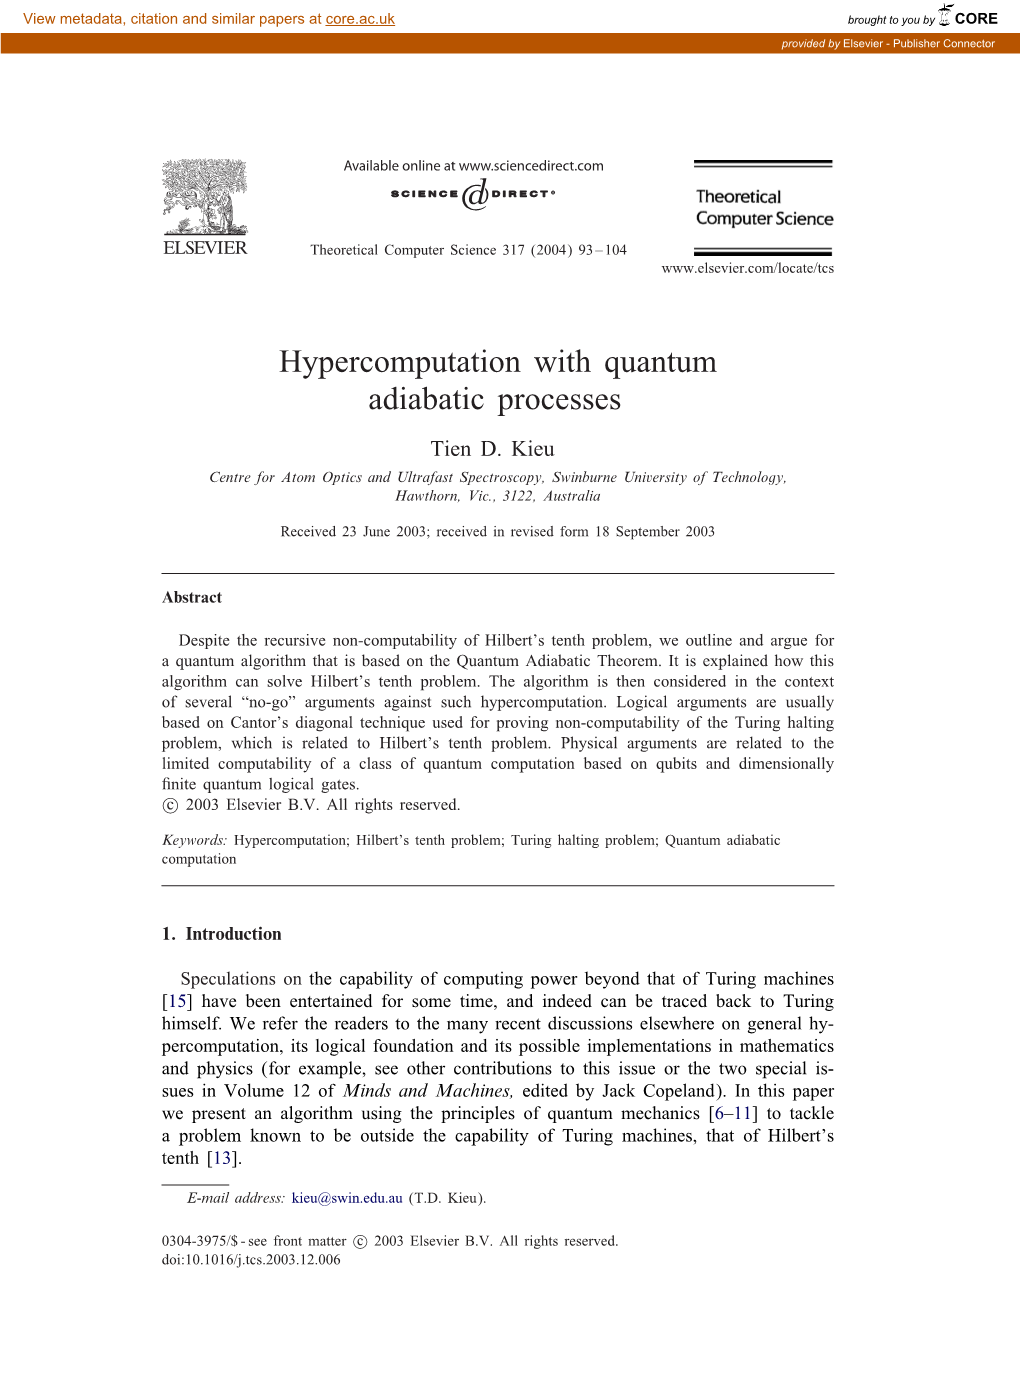 Hypercomputation with Quantum Adiabatic Processes